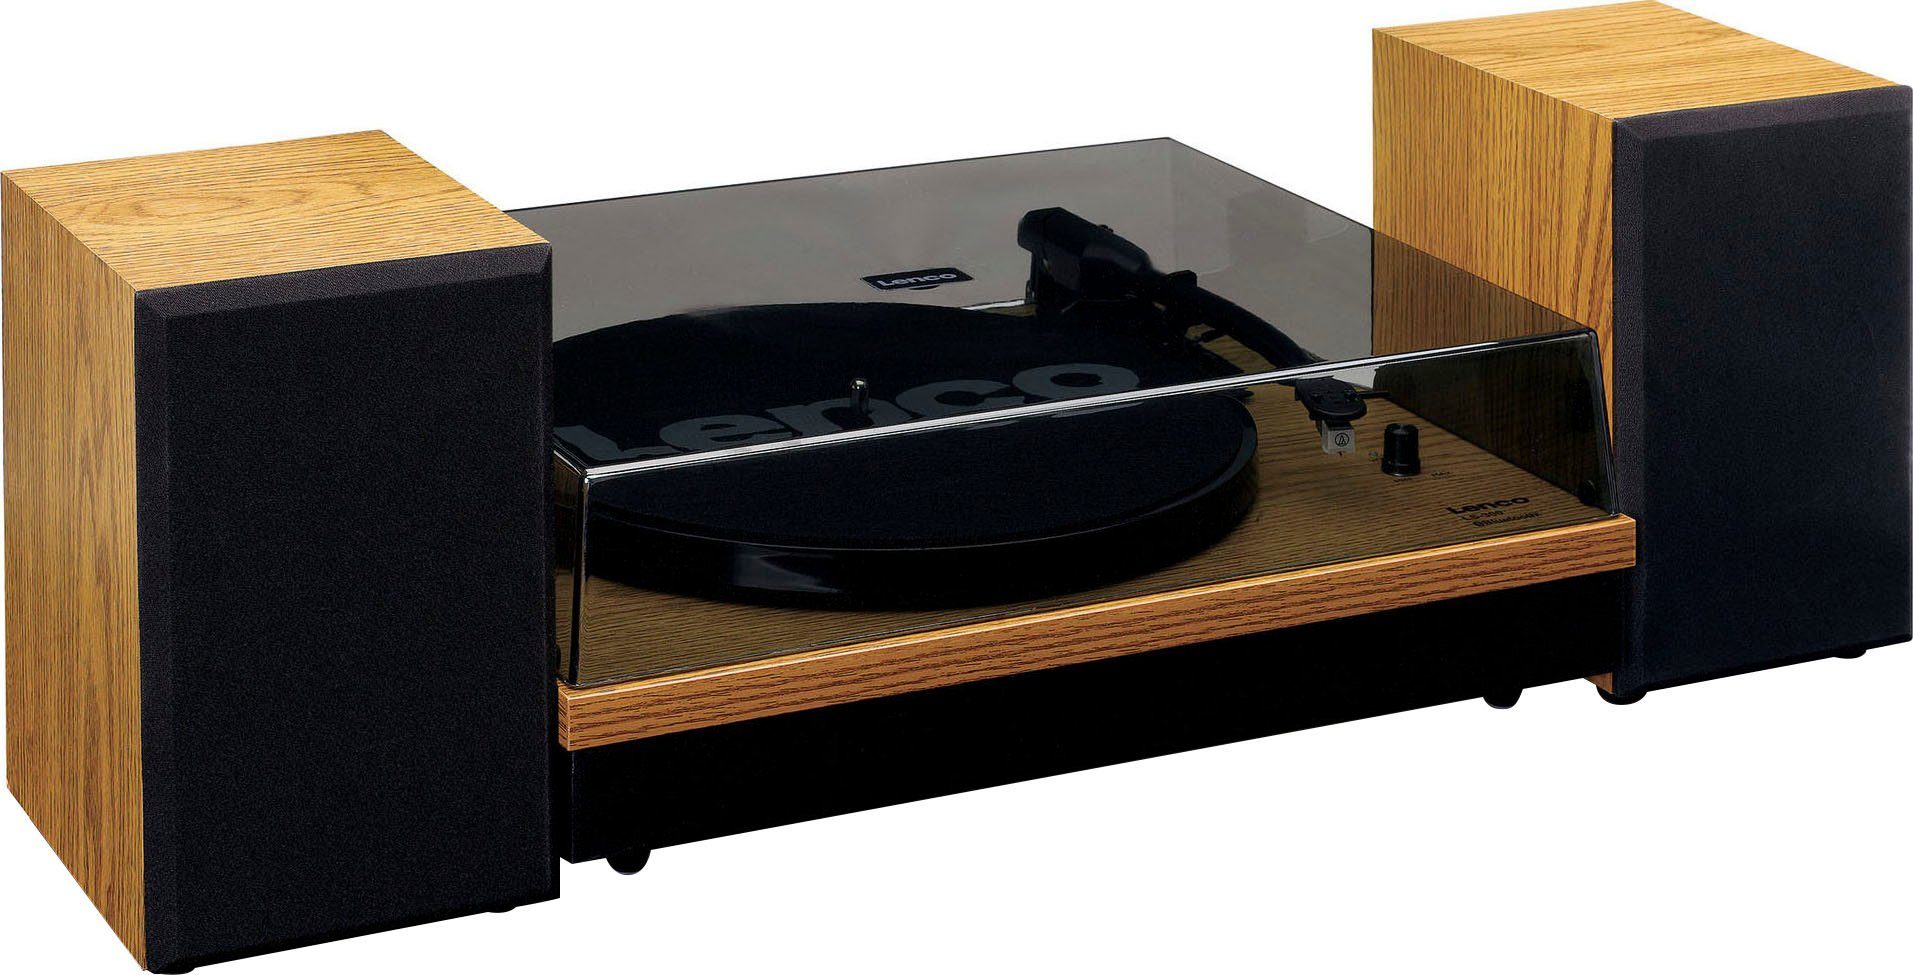 Lenco LS-300WD Plattenspieler ext. Plattenspieler (Riemenantrieb) Holz mit Lautsprechern